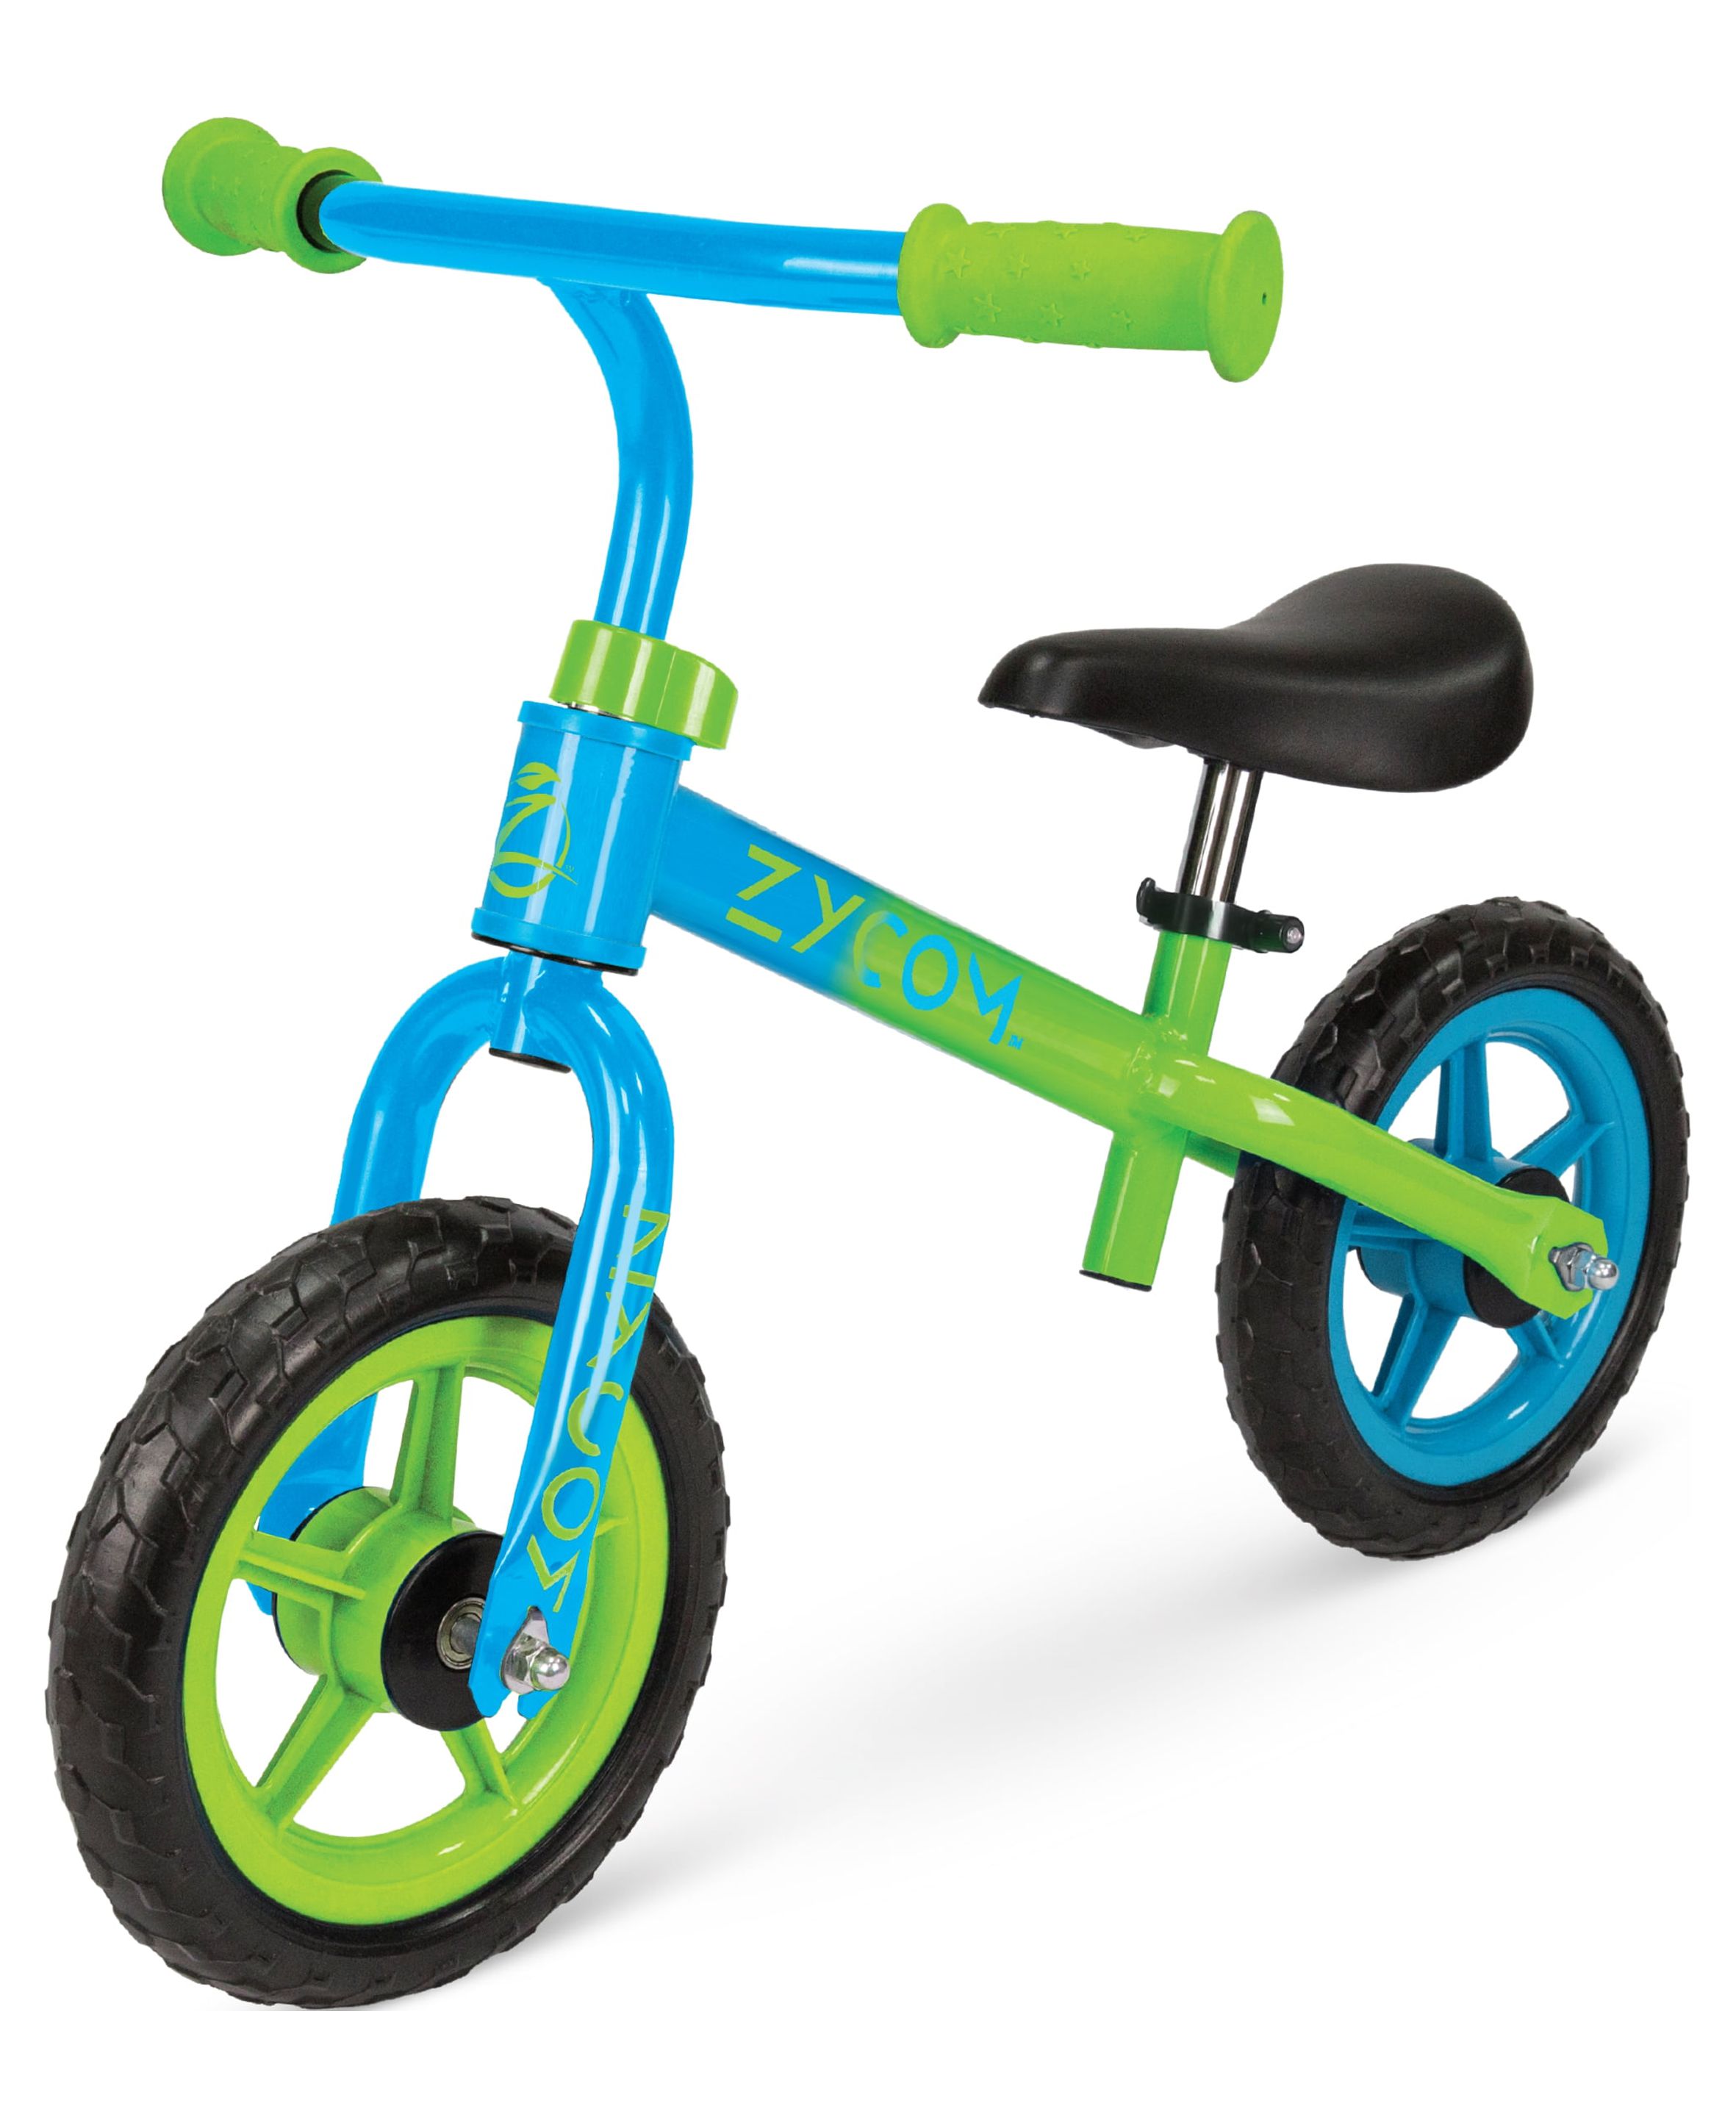 Zycom 10-inch Toddlers Balance Bike Adjustable Helmet Airless Wheels Lightweight Training Bike Blue - image 11 of 12